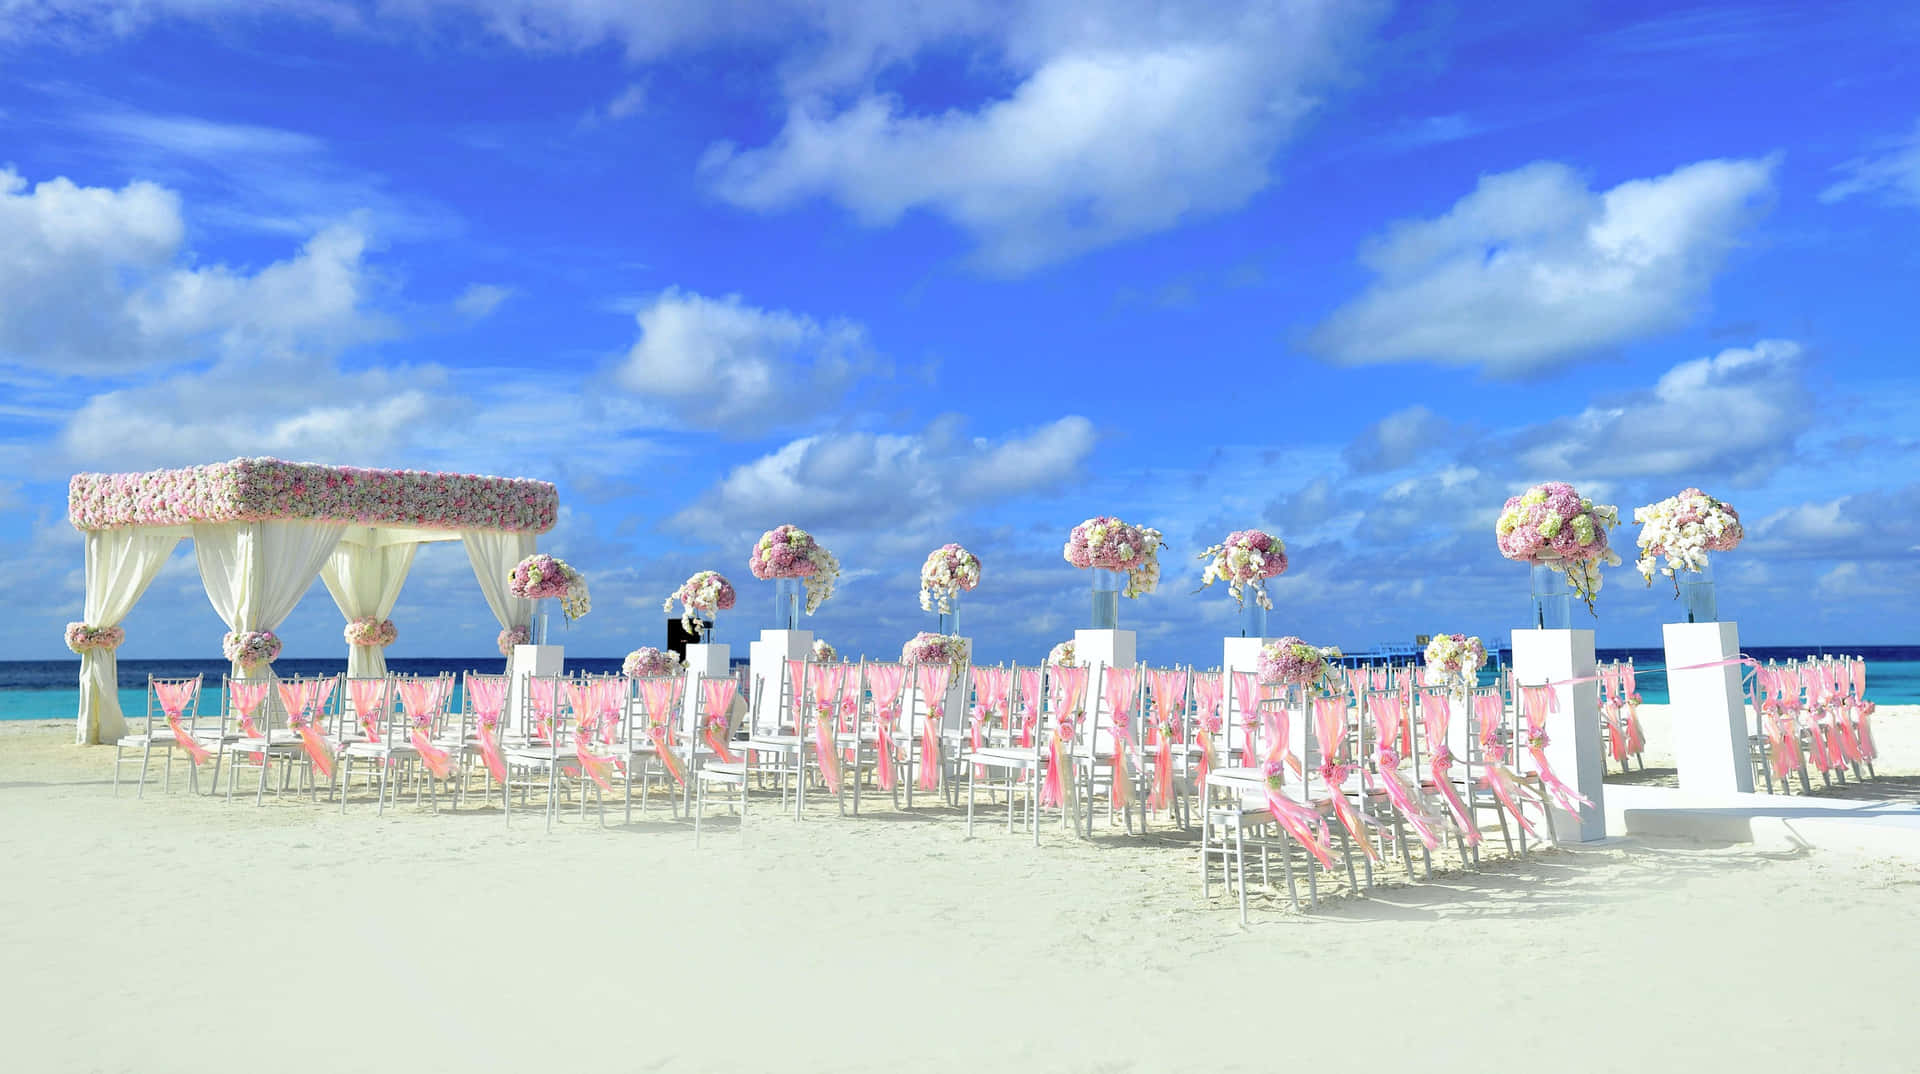 Enchanting Beach Wedding Ceremony At Dusk Wallpaper